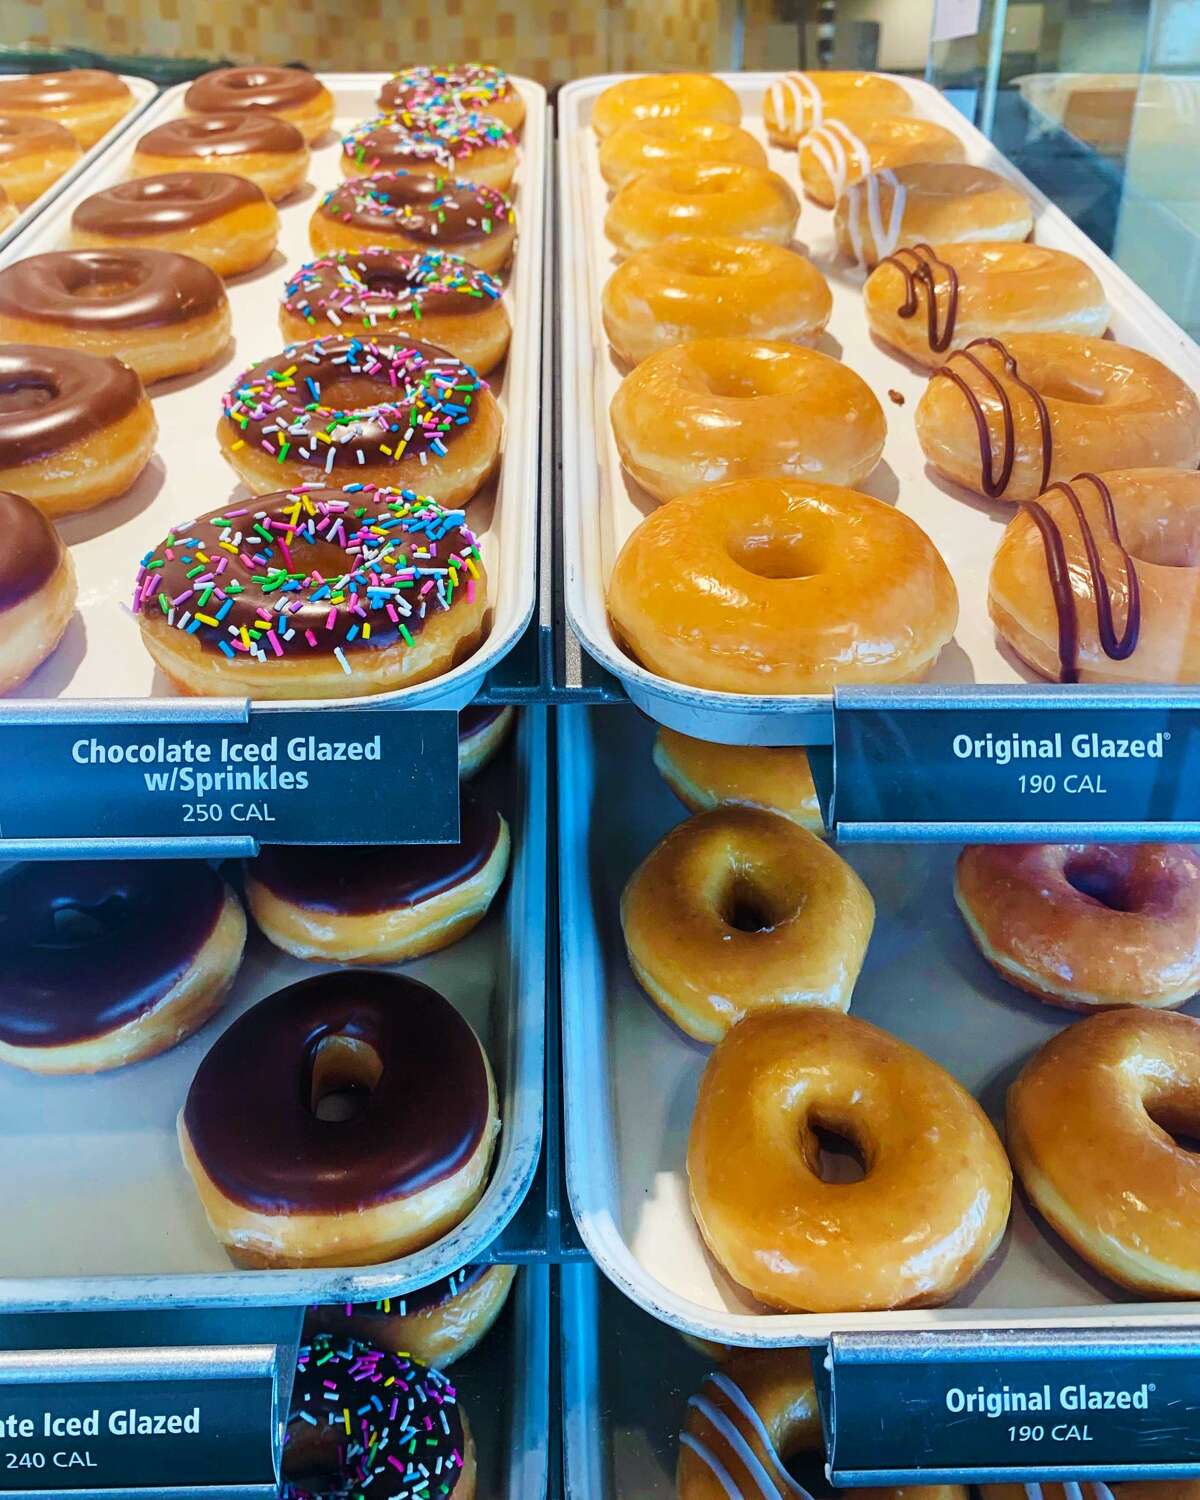 The pastry case at the Union City Krispy Kreme location.